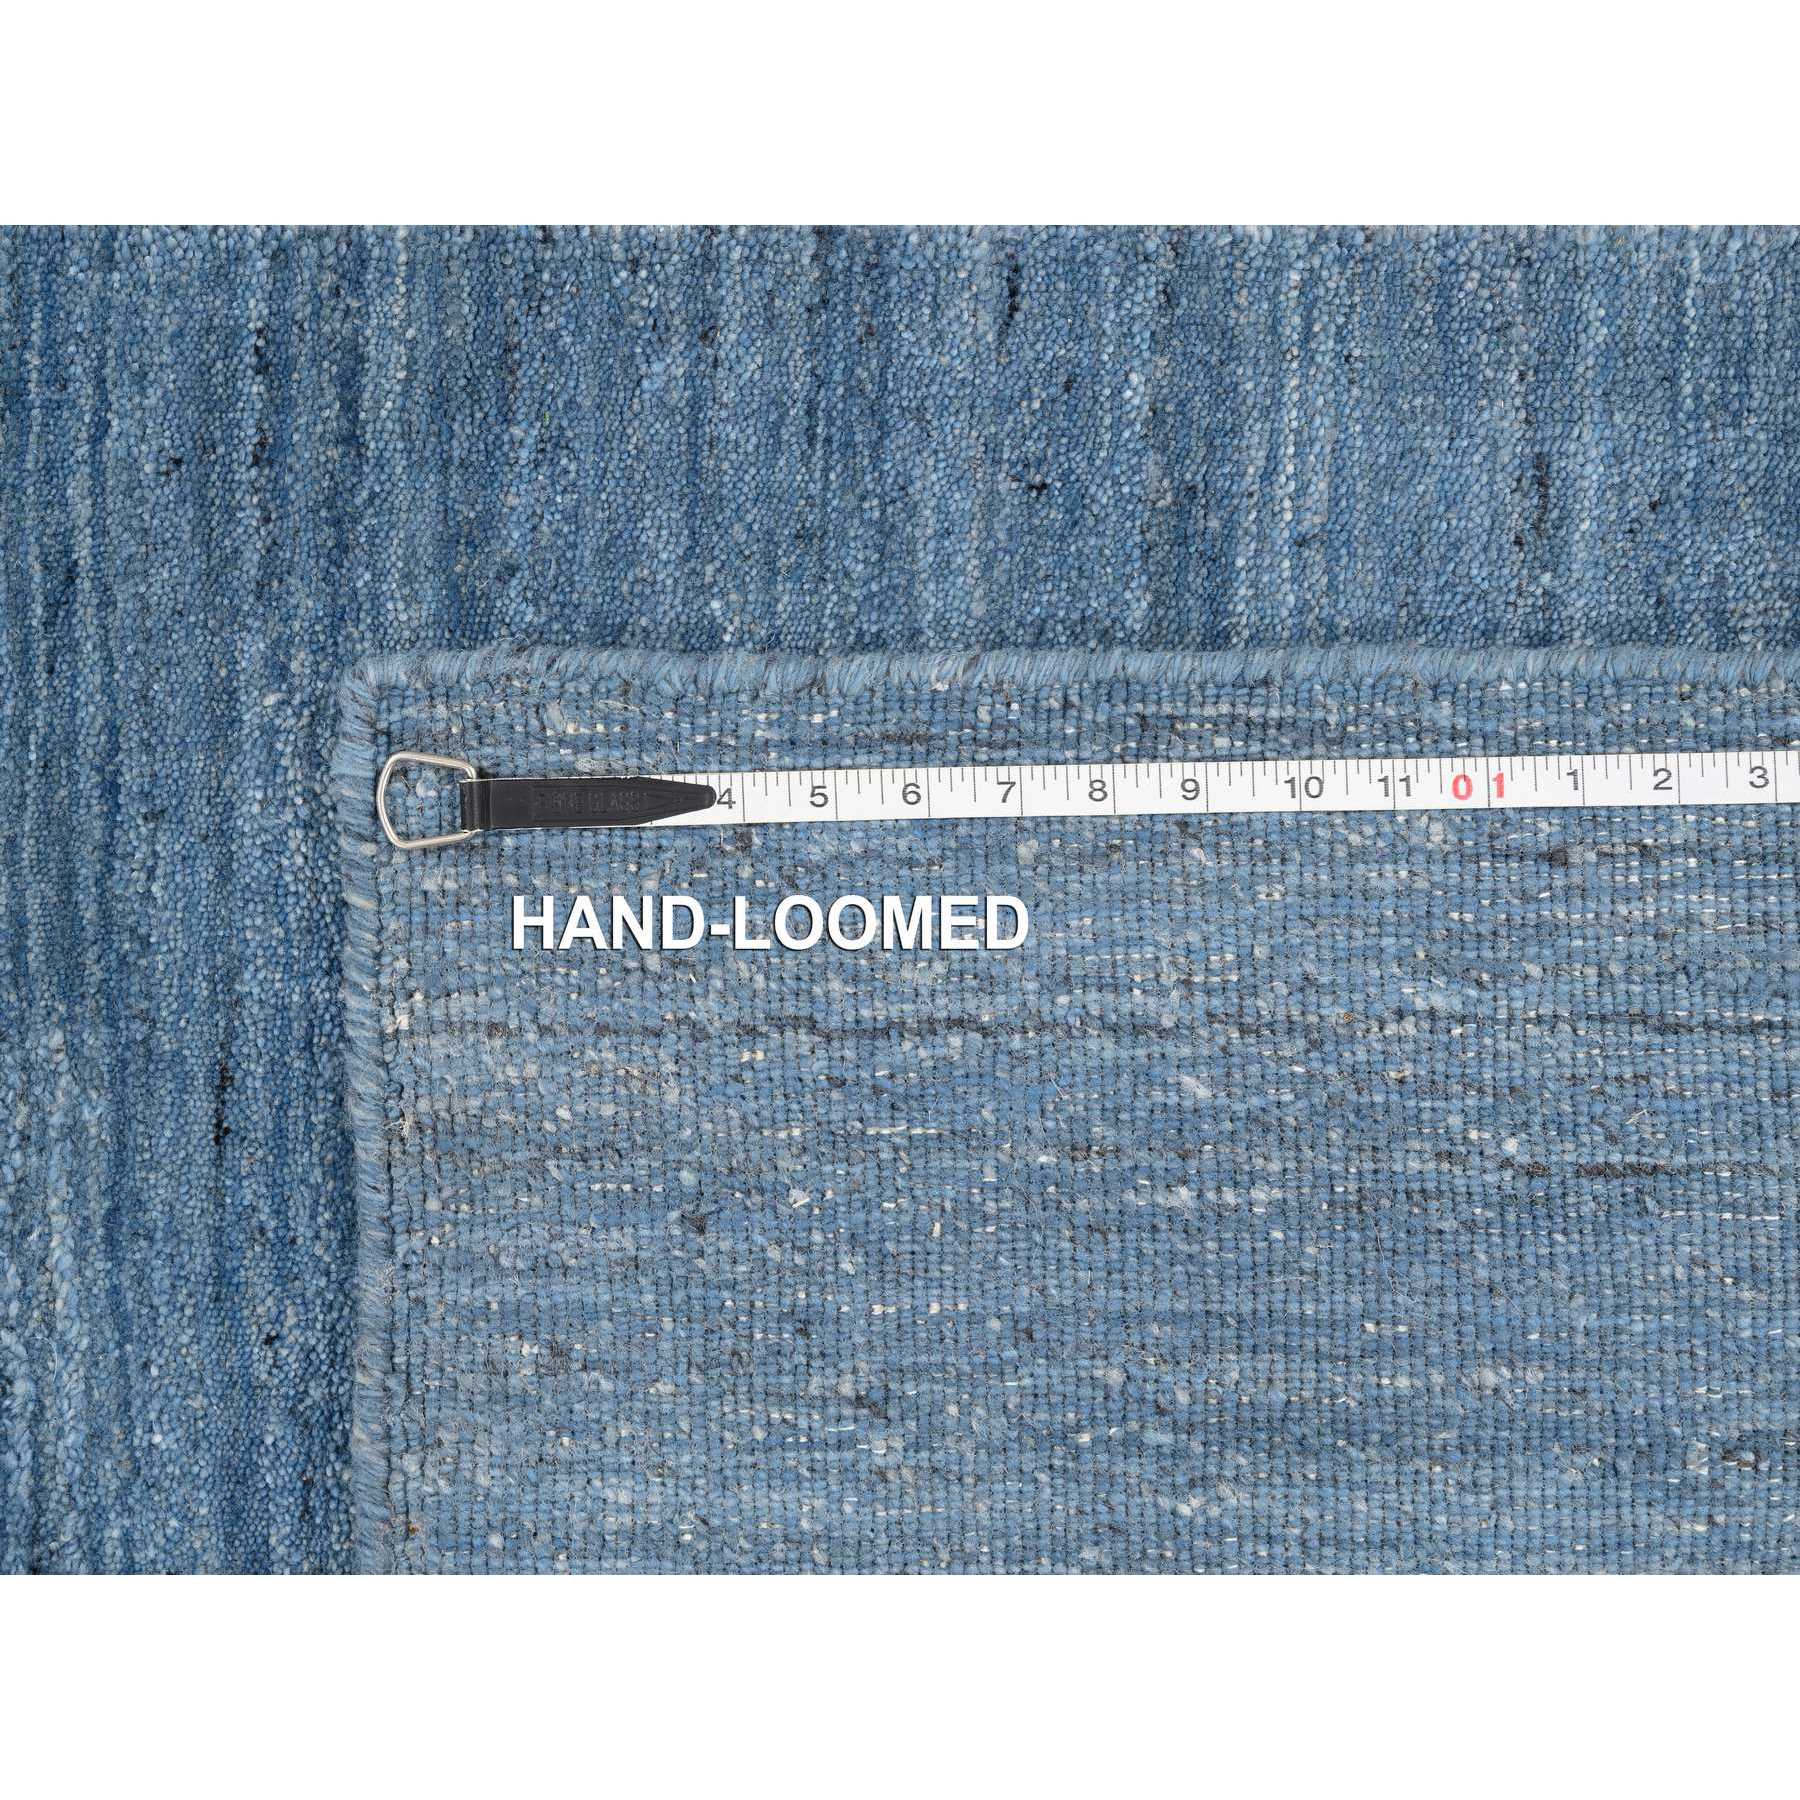 2'6"x6'1" Denim Blue, Hand Loomed Modern Design, Tone on Tone Natural Wool, Runner Oriental Rug 